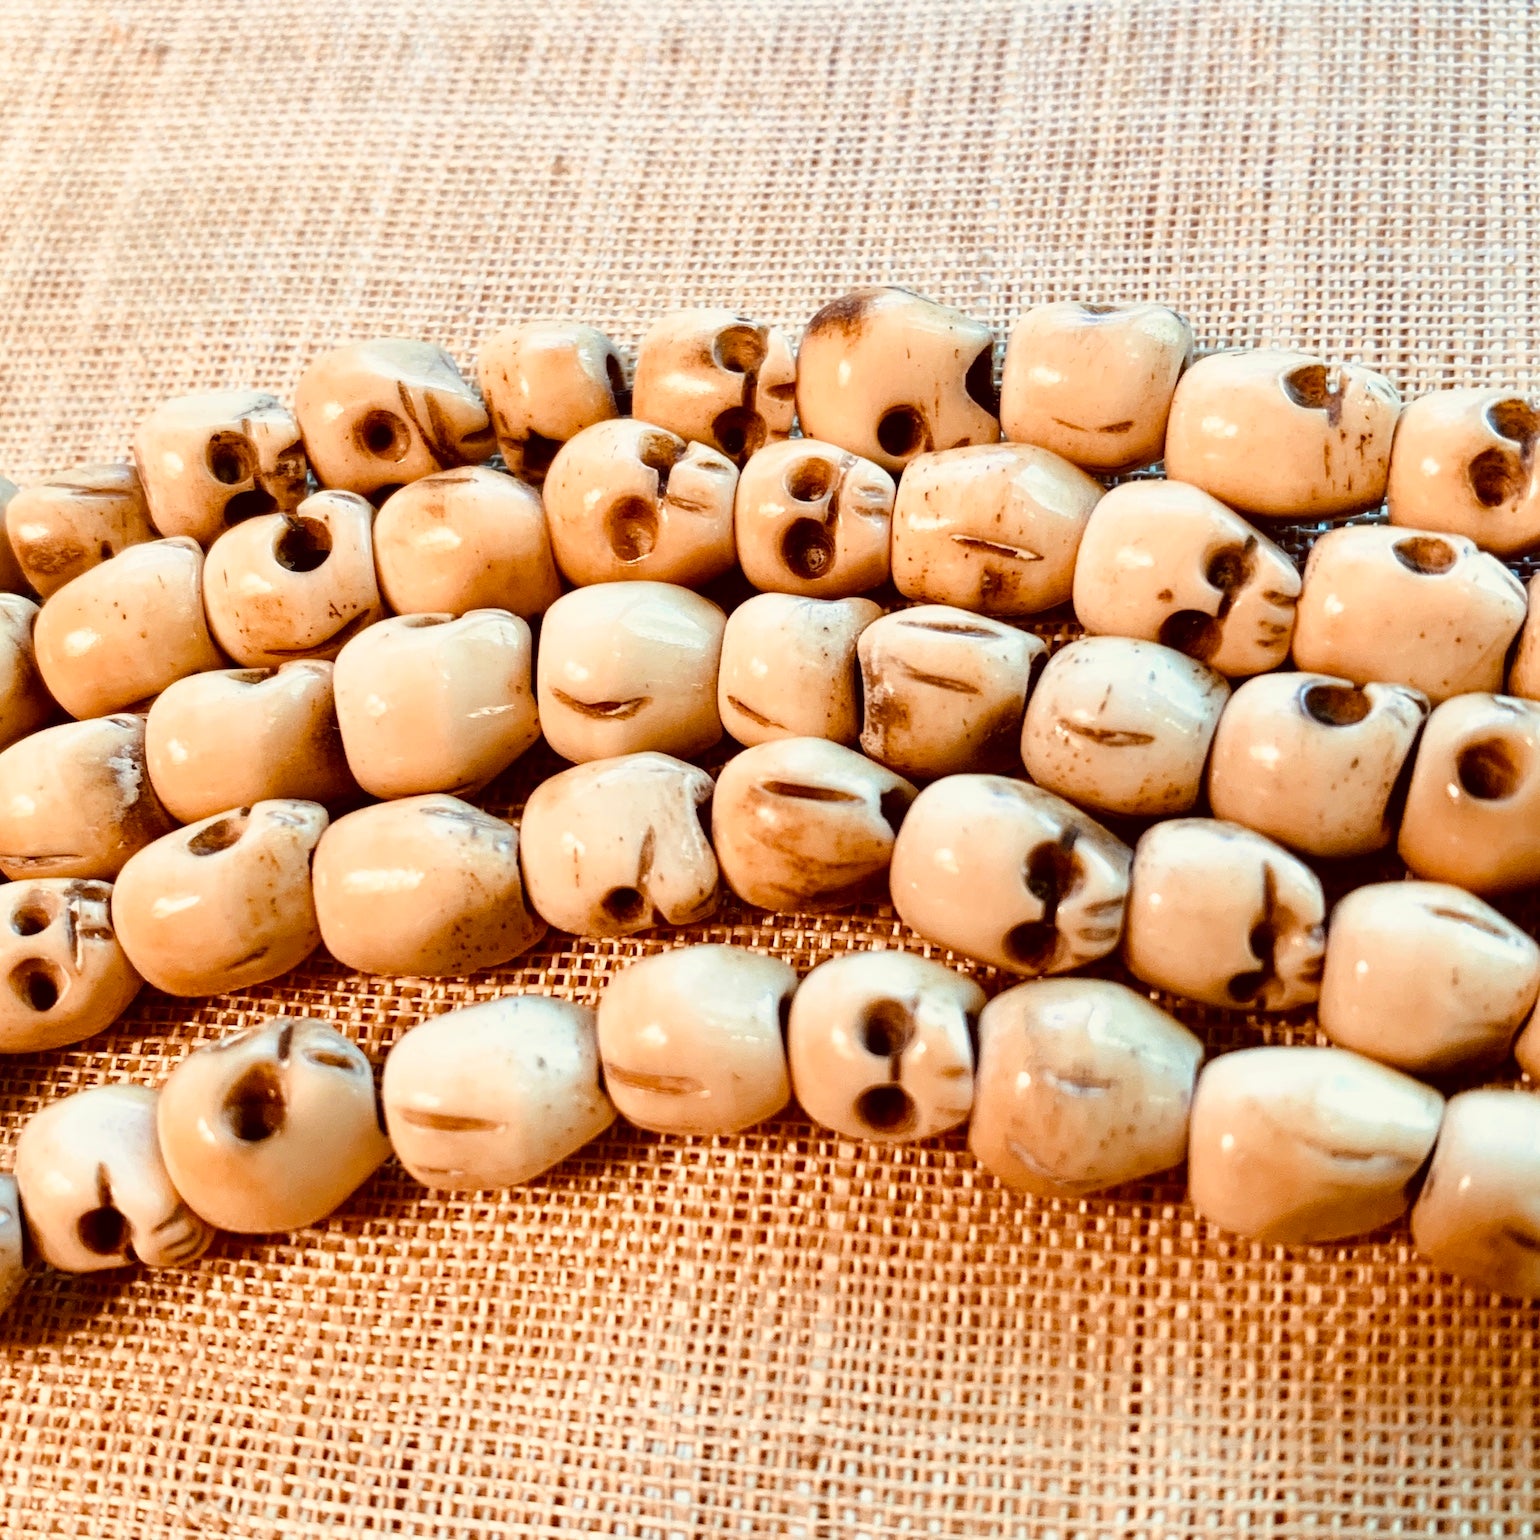 BD02425, carved bone beads, India, made in India, hand carved bone beads,  4mm bone beads, bovine, Indian bone beads, bleached bone, off white bone